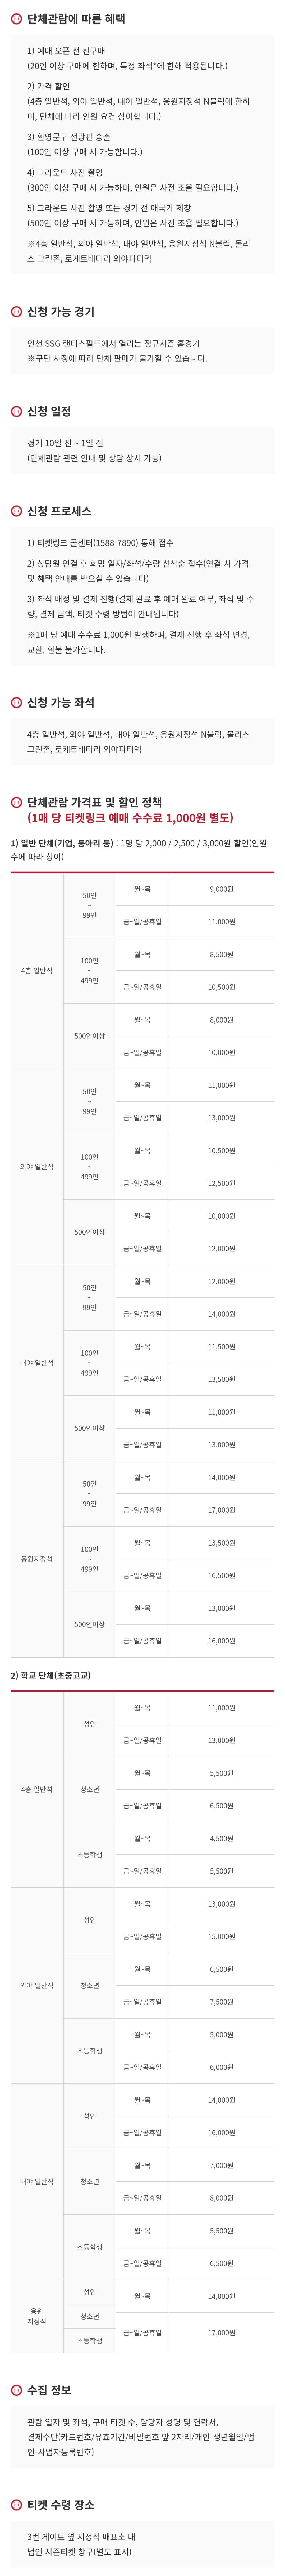 SSG랜더스 인천 SSG랜더스필드 단체관람 혜택&#44; 입장권 요금&#44; 티켓 가격 등 구매 안내